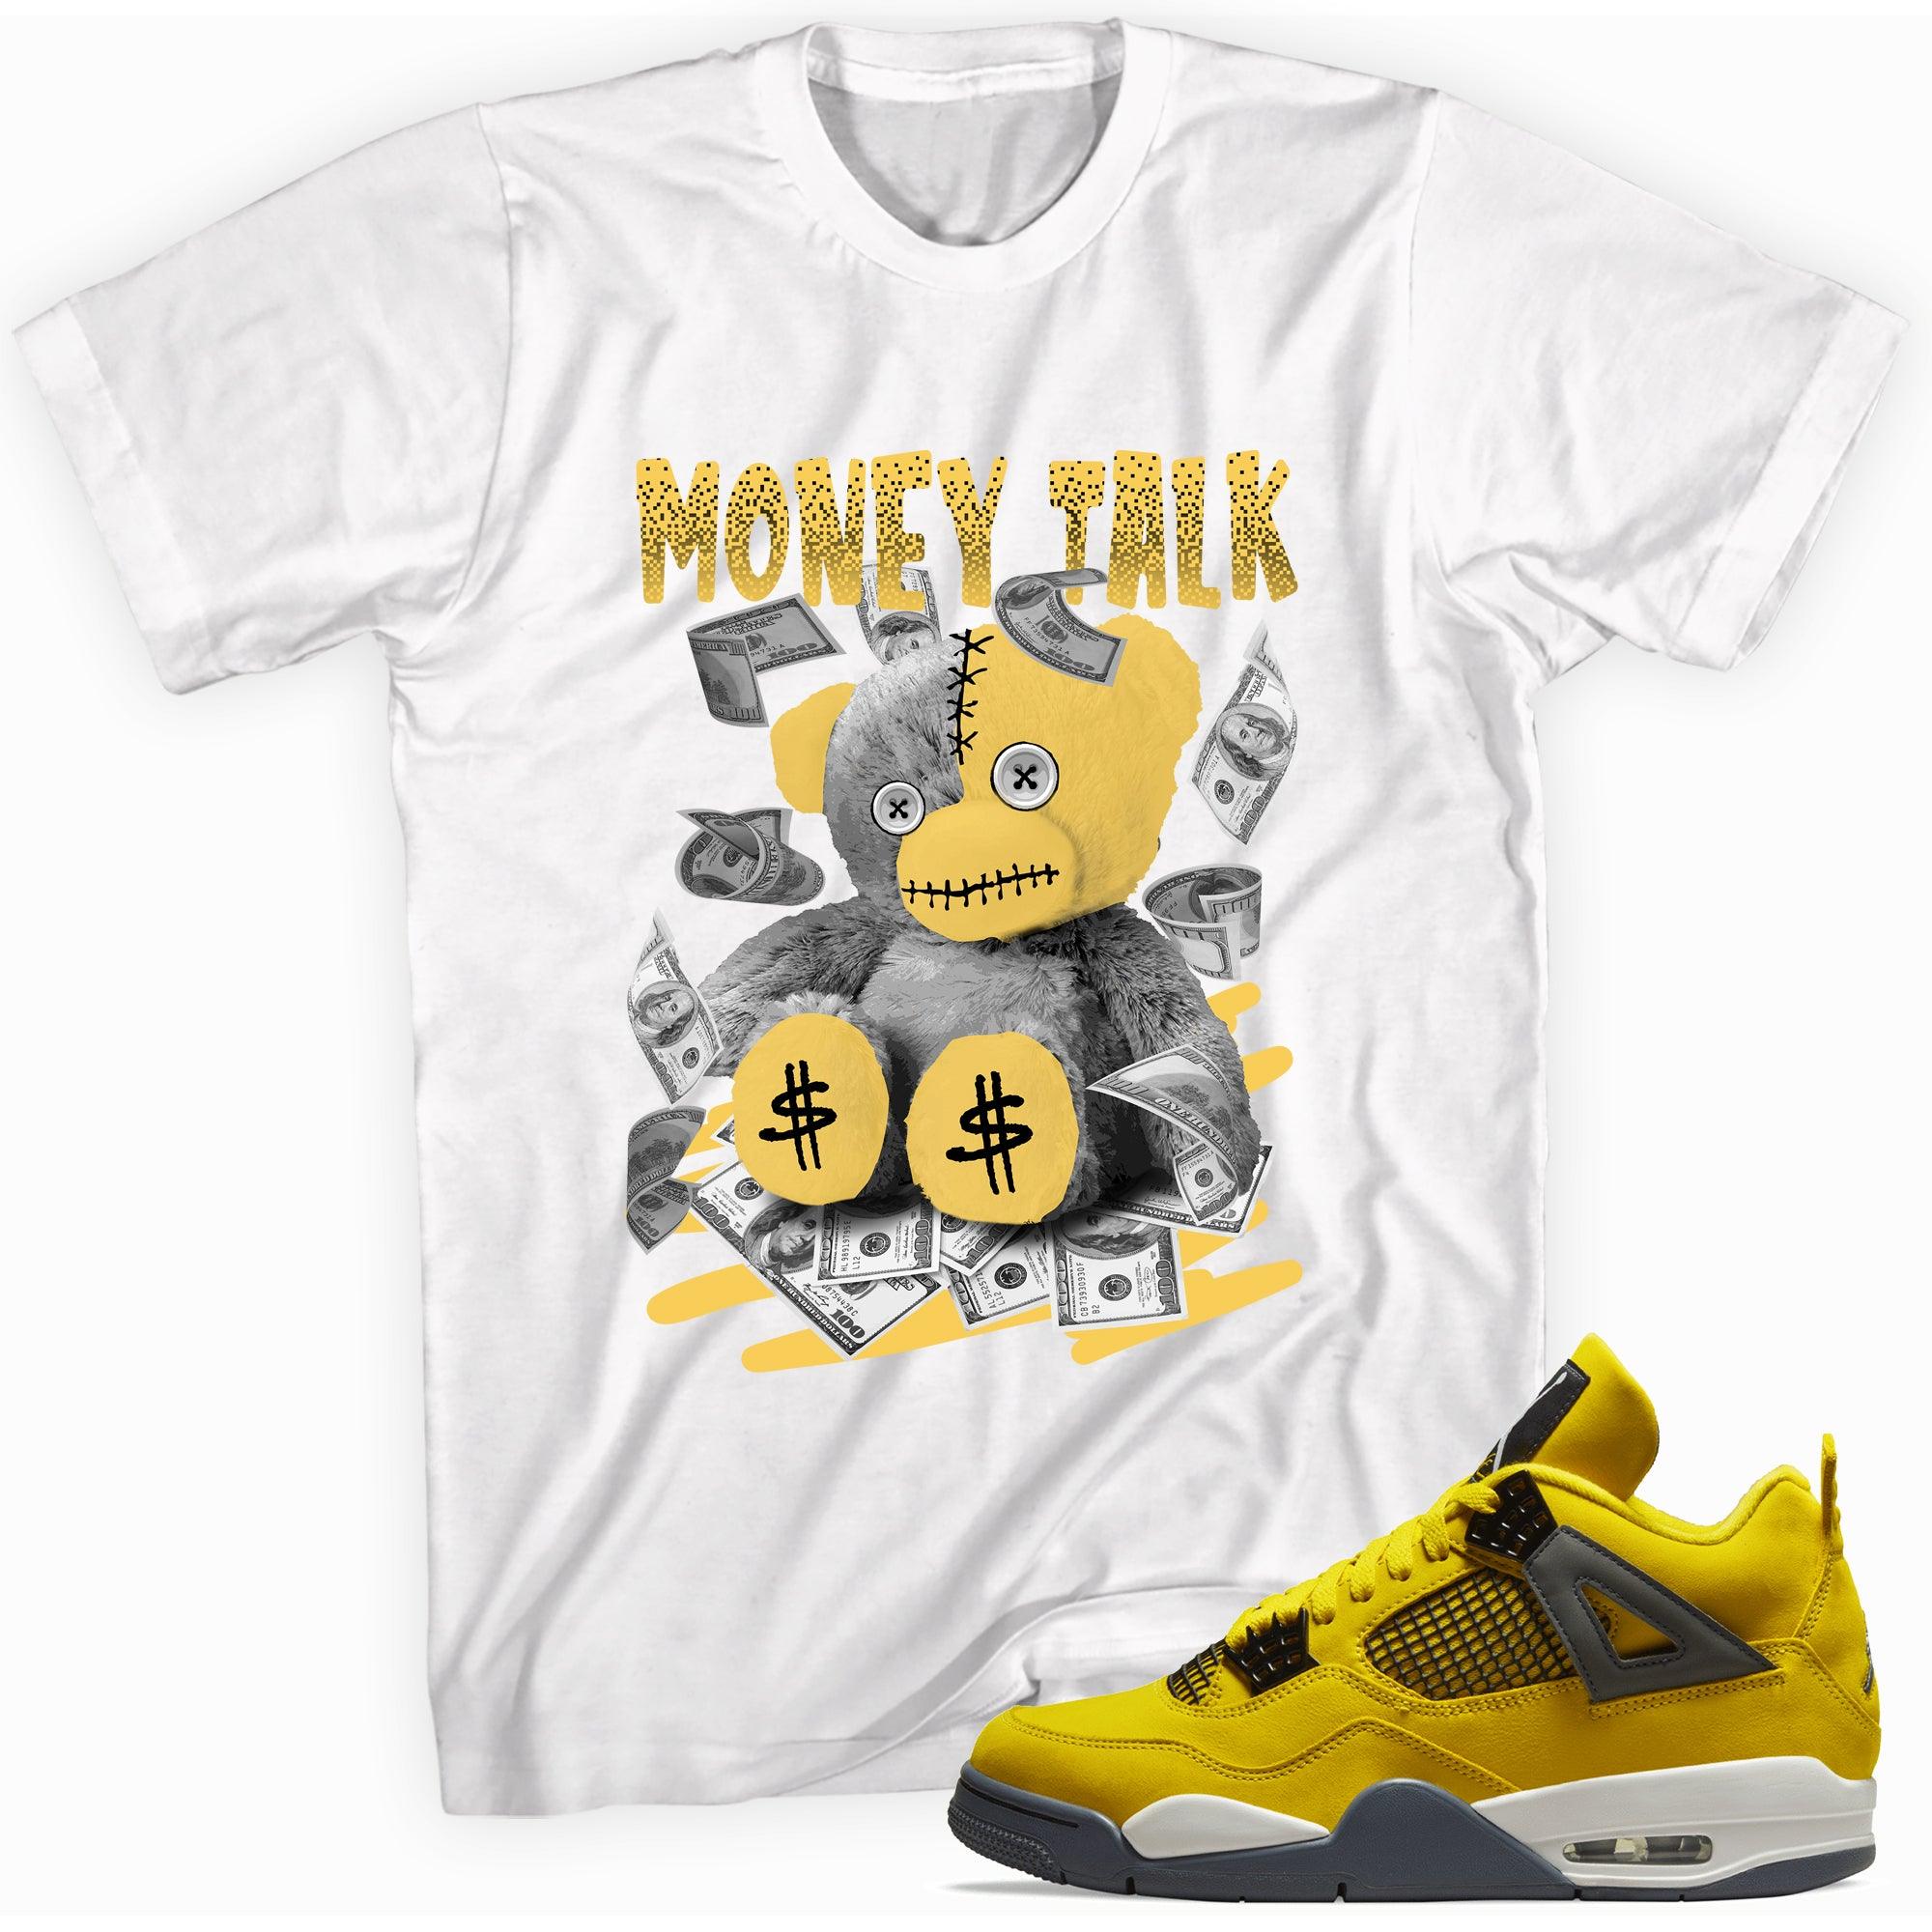 Money Talk Sneaker Tee AJ 4 Retro Lightning 2021 photo